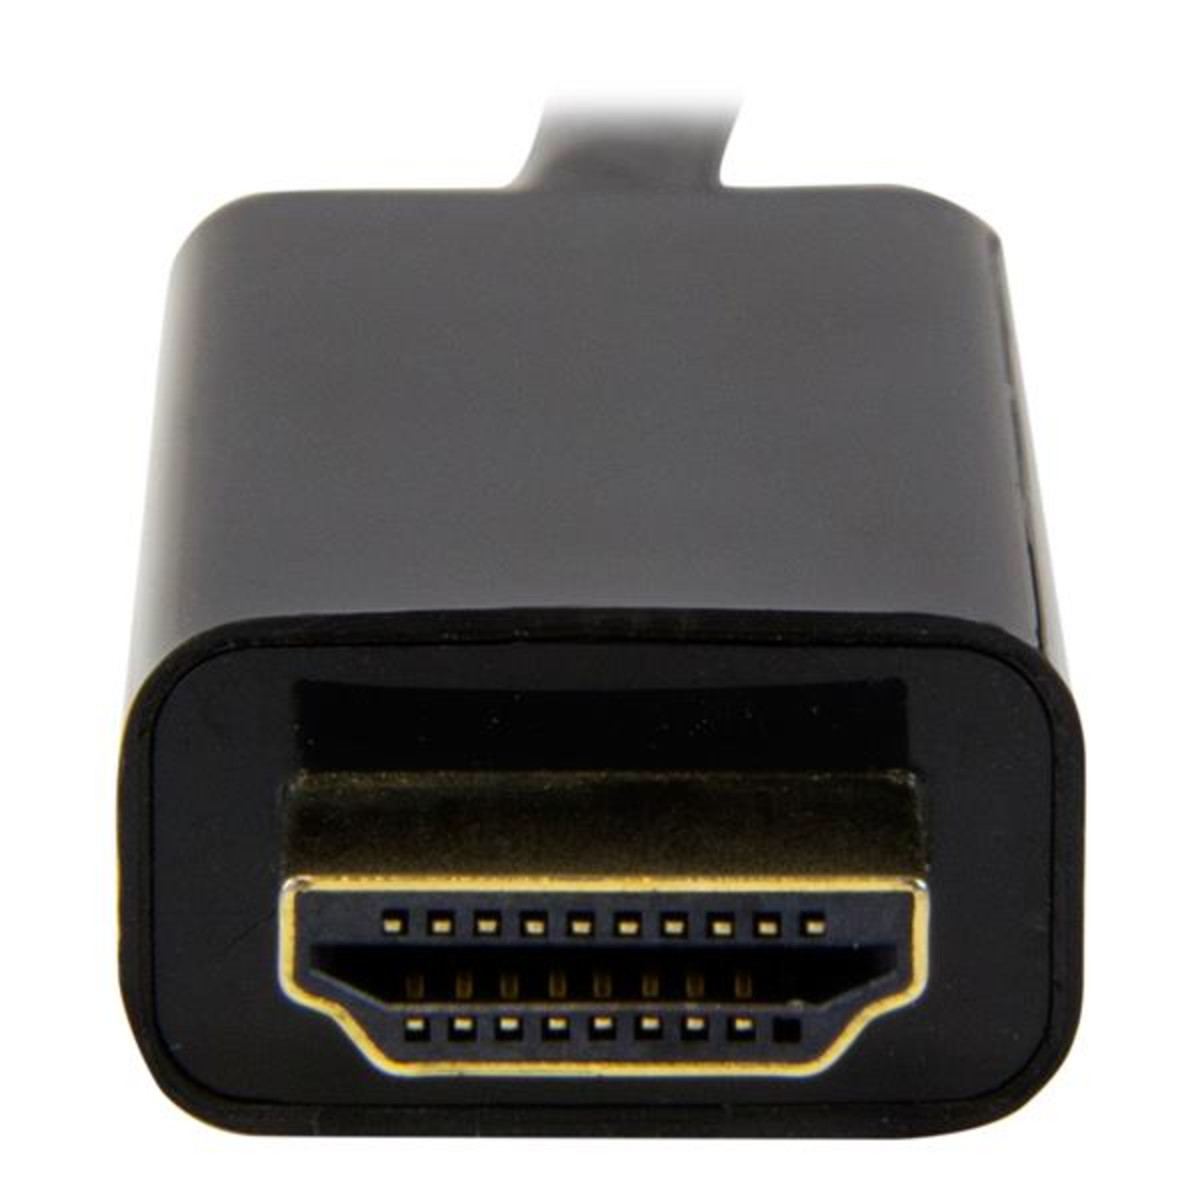 Mini DP to HDMI converter cable